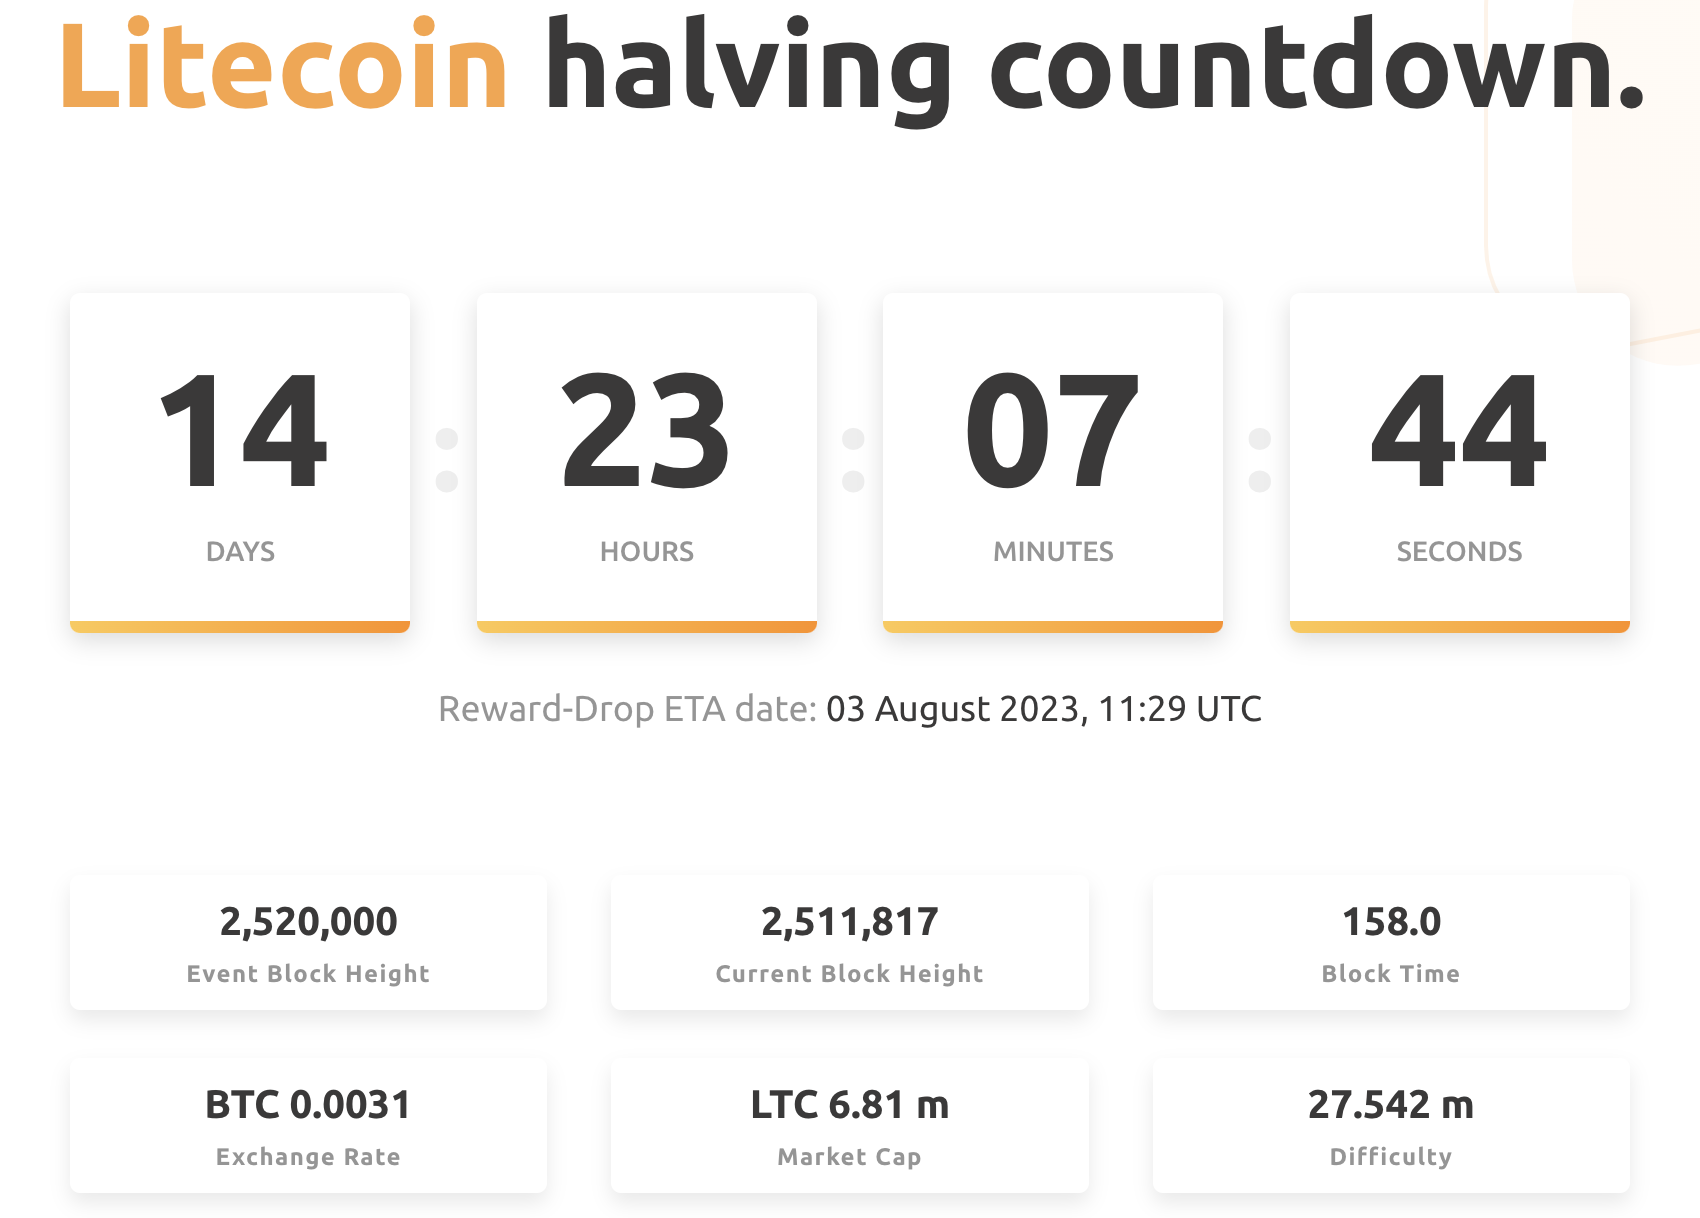 Litecoin halving countdown